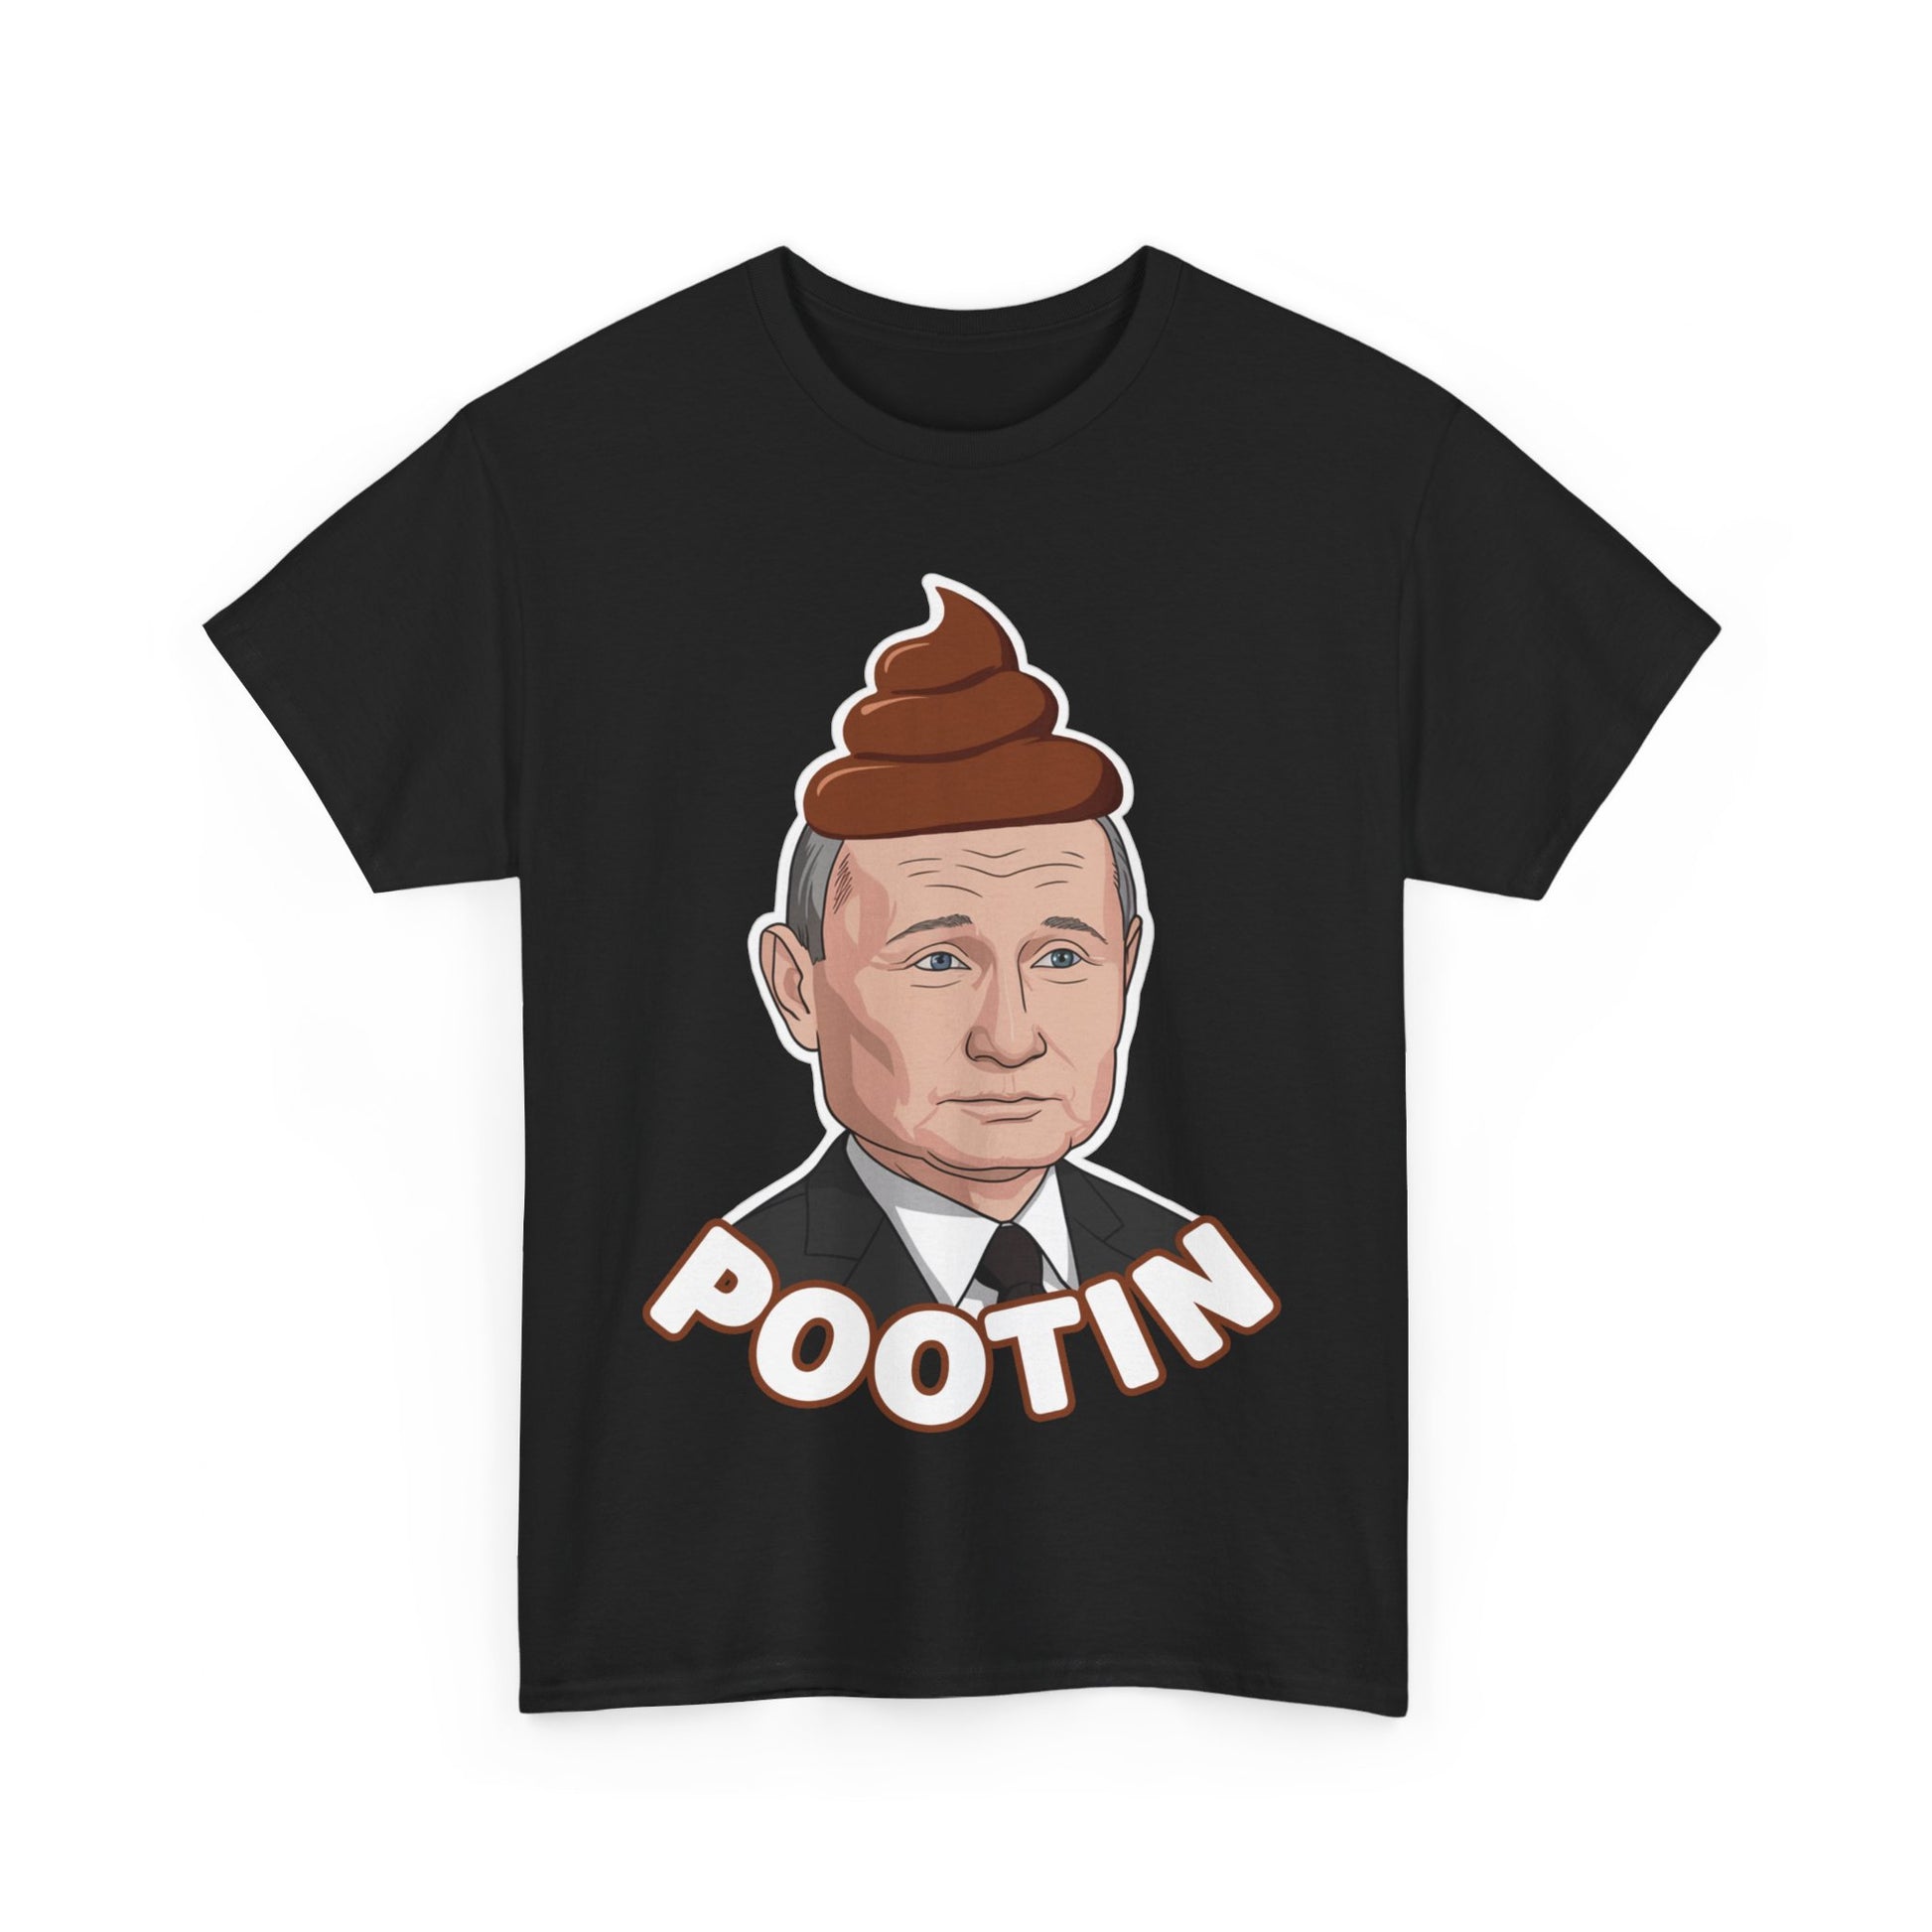 Pootin Funny Anti Vladimir Putin Unisex Heavy Cotton Tee Next Cult Brand